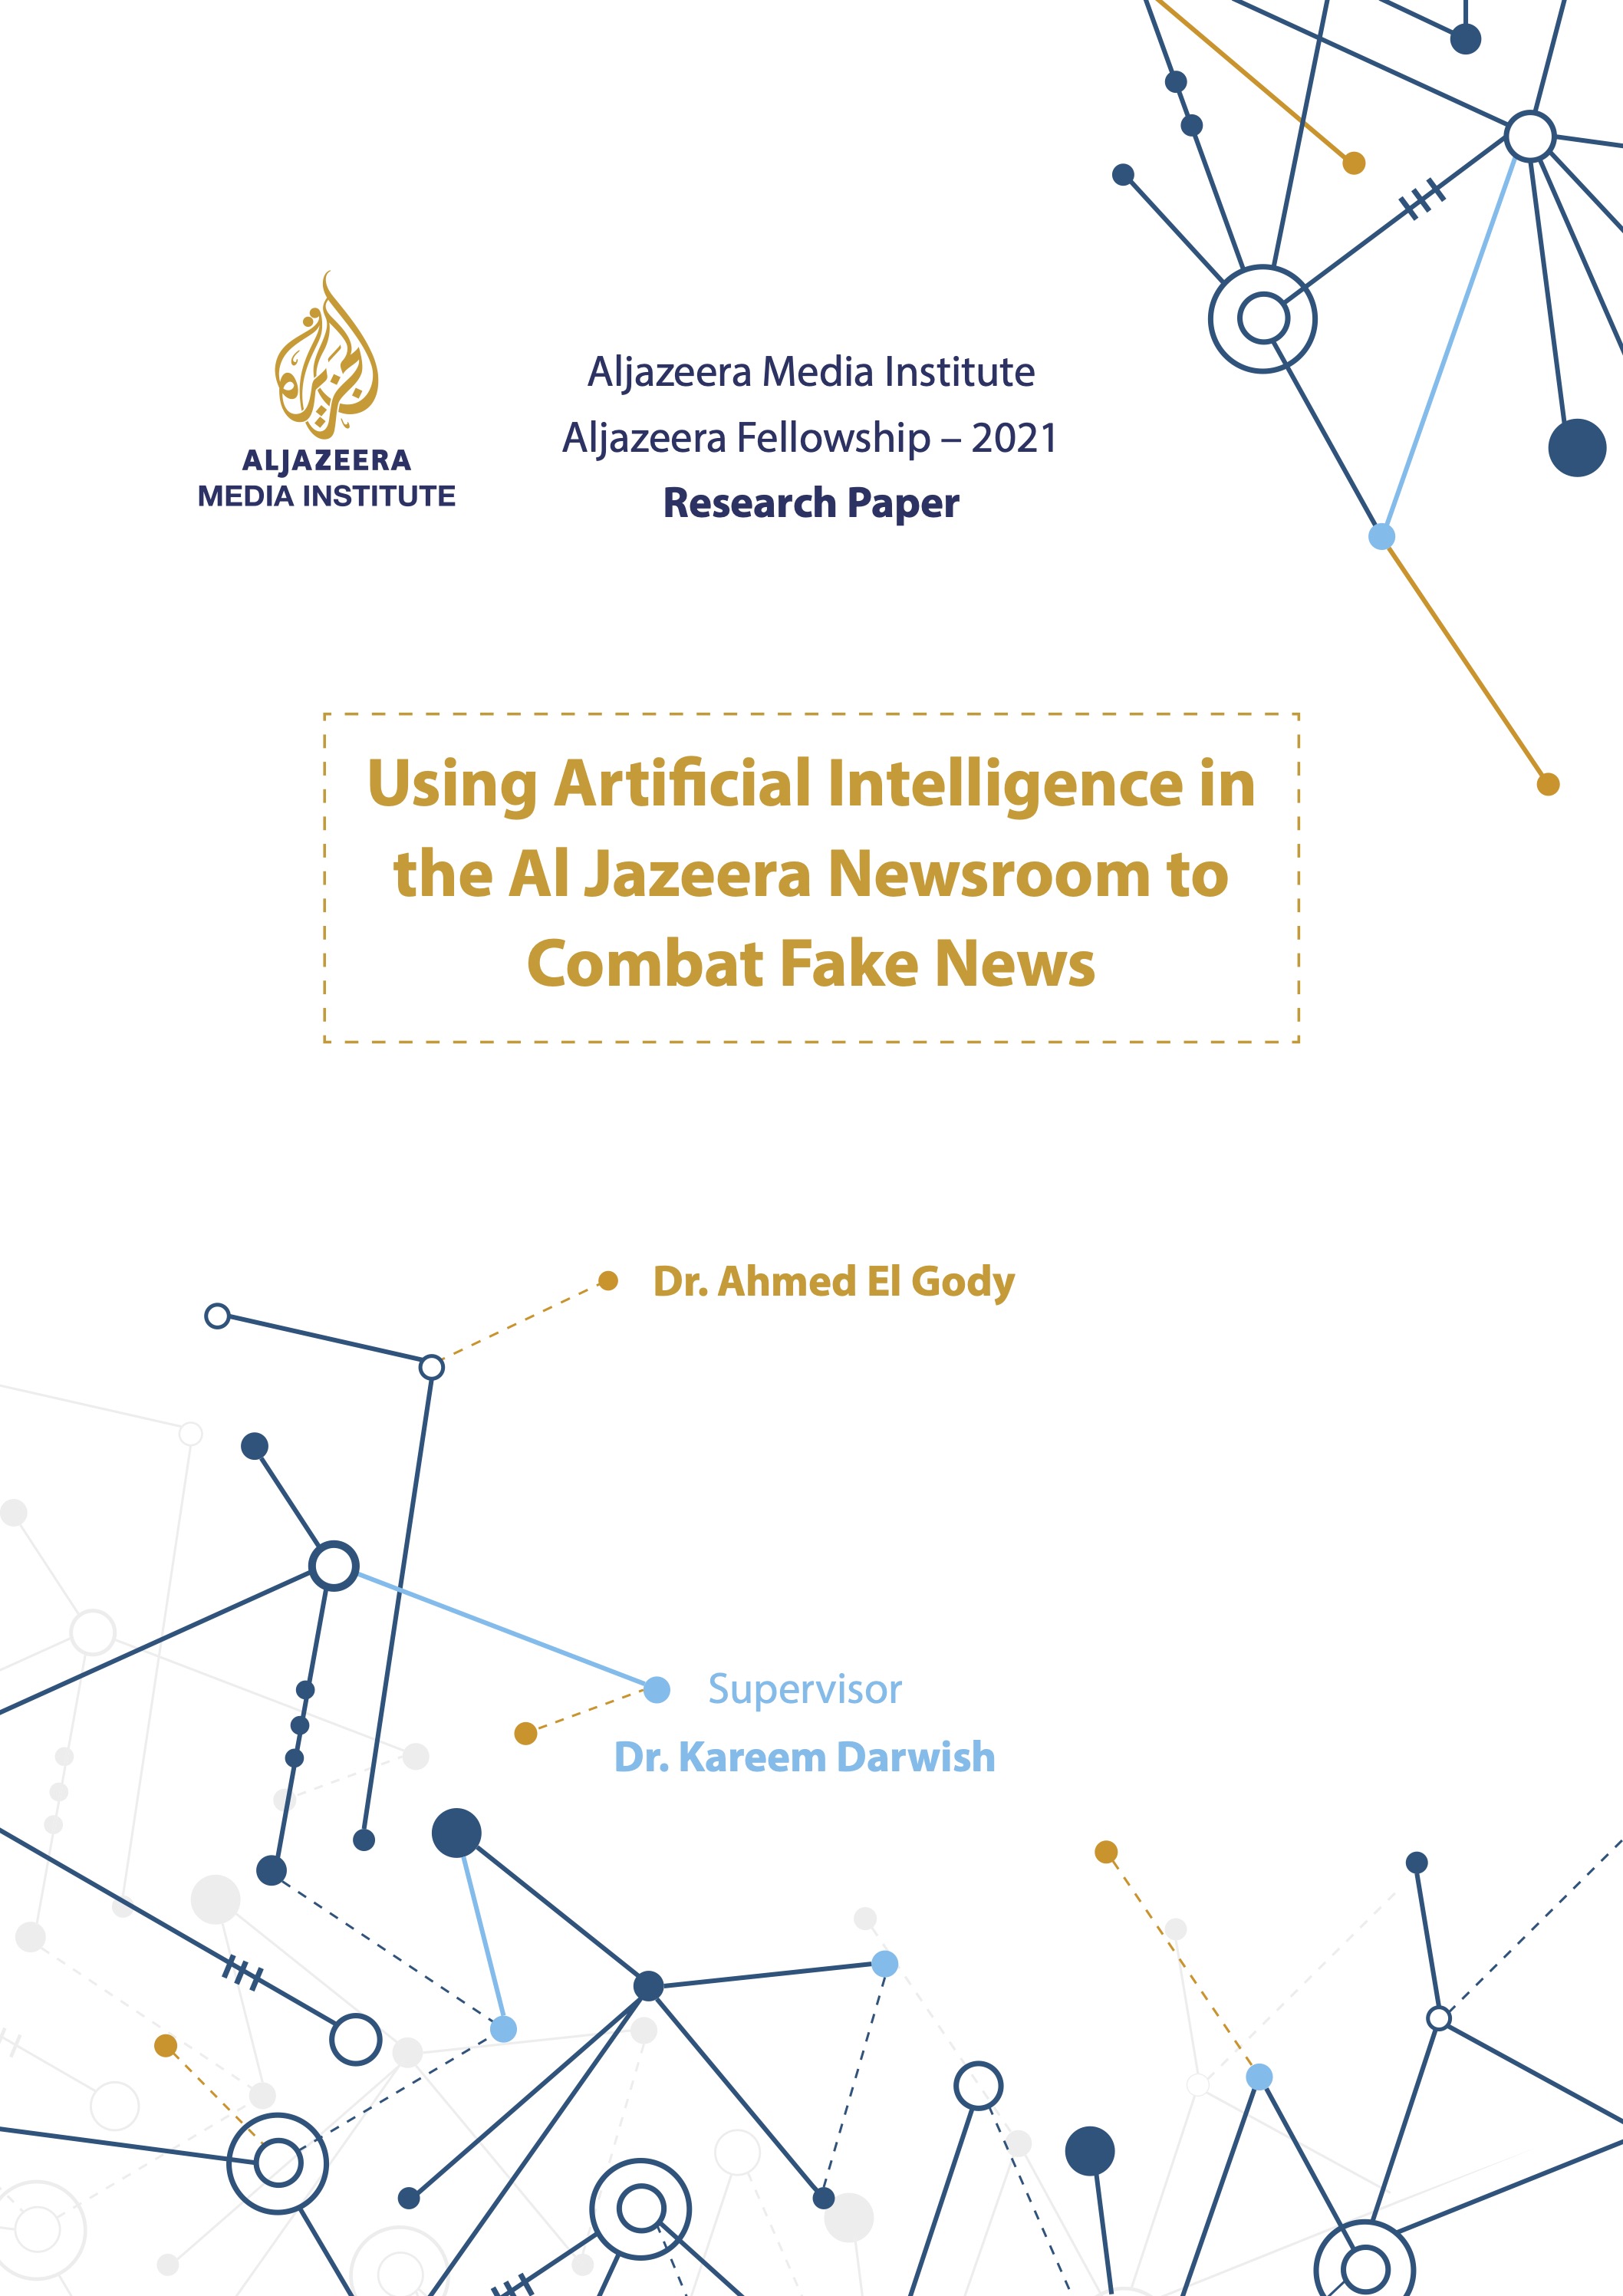 Using Artificial Intelligence in the AlJazeera Newsroom to Combat Fake News